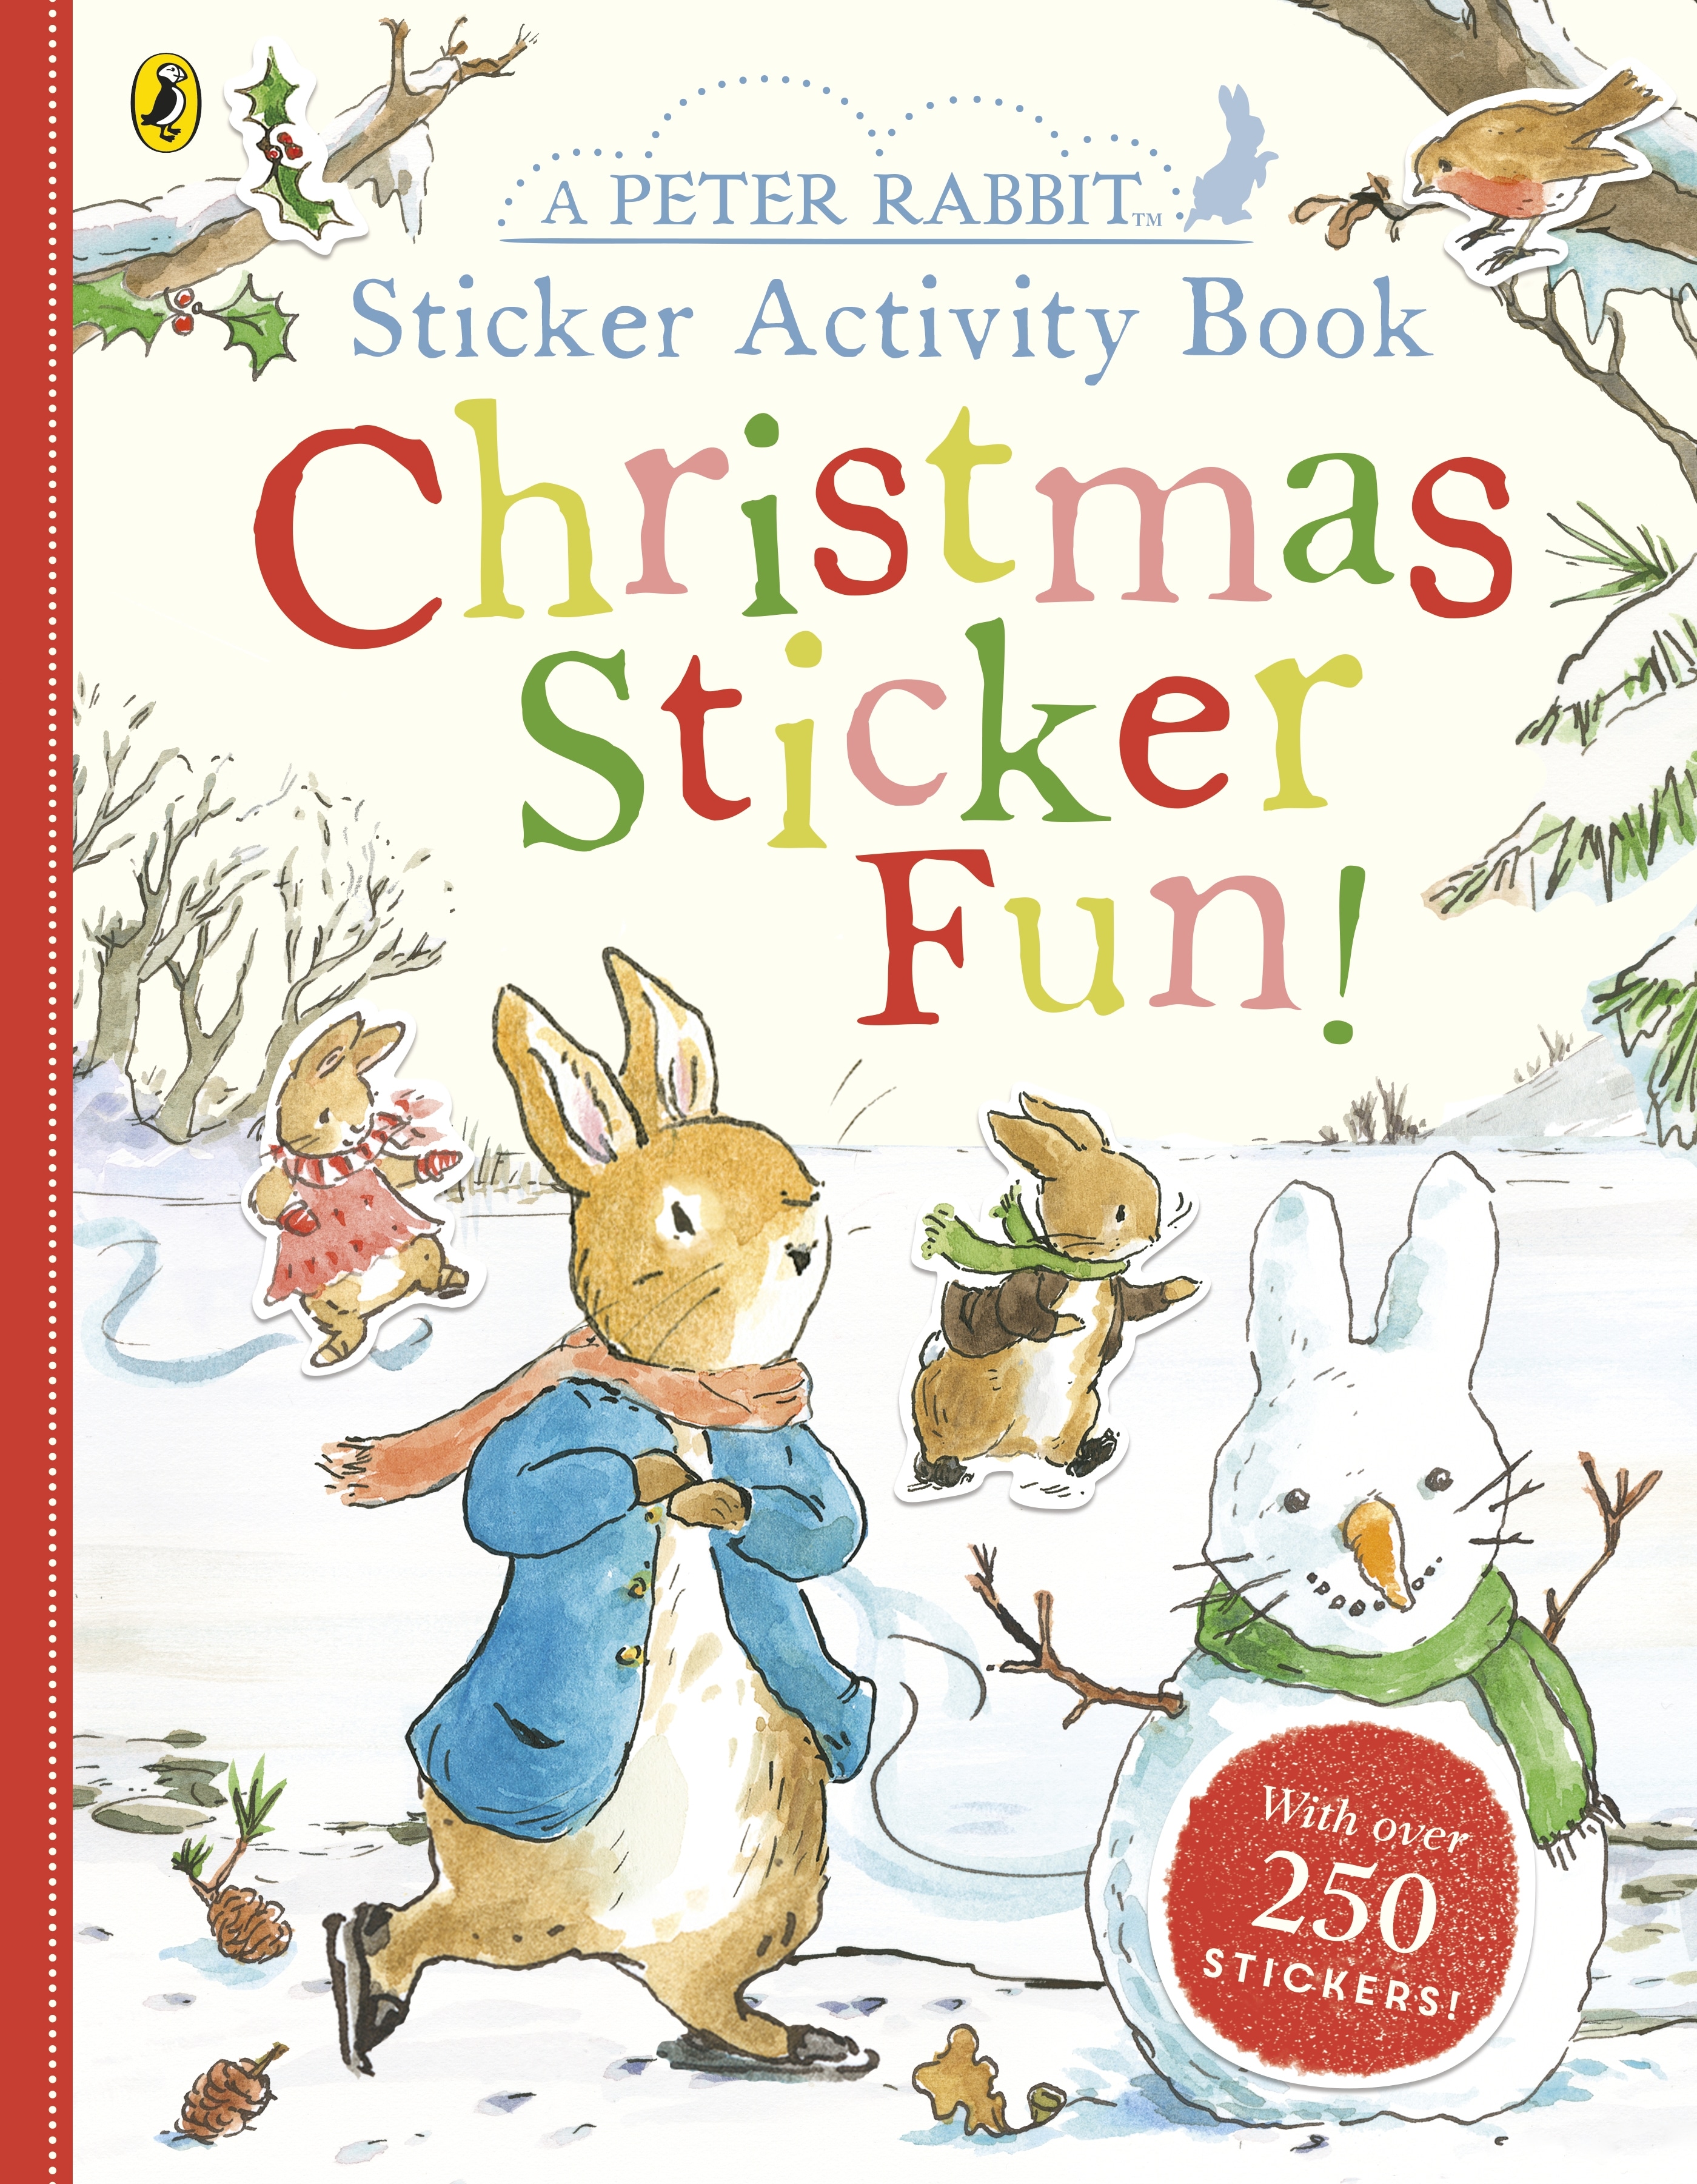 Book “Peter Rabbit Christmas Fun Sticker Activity Book” by Beatrix Potter — October 15, 2020